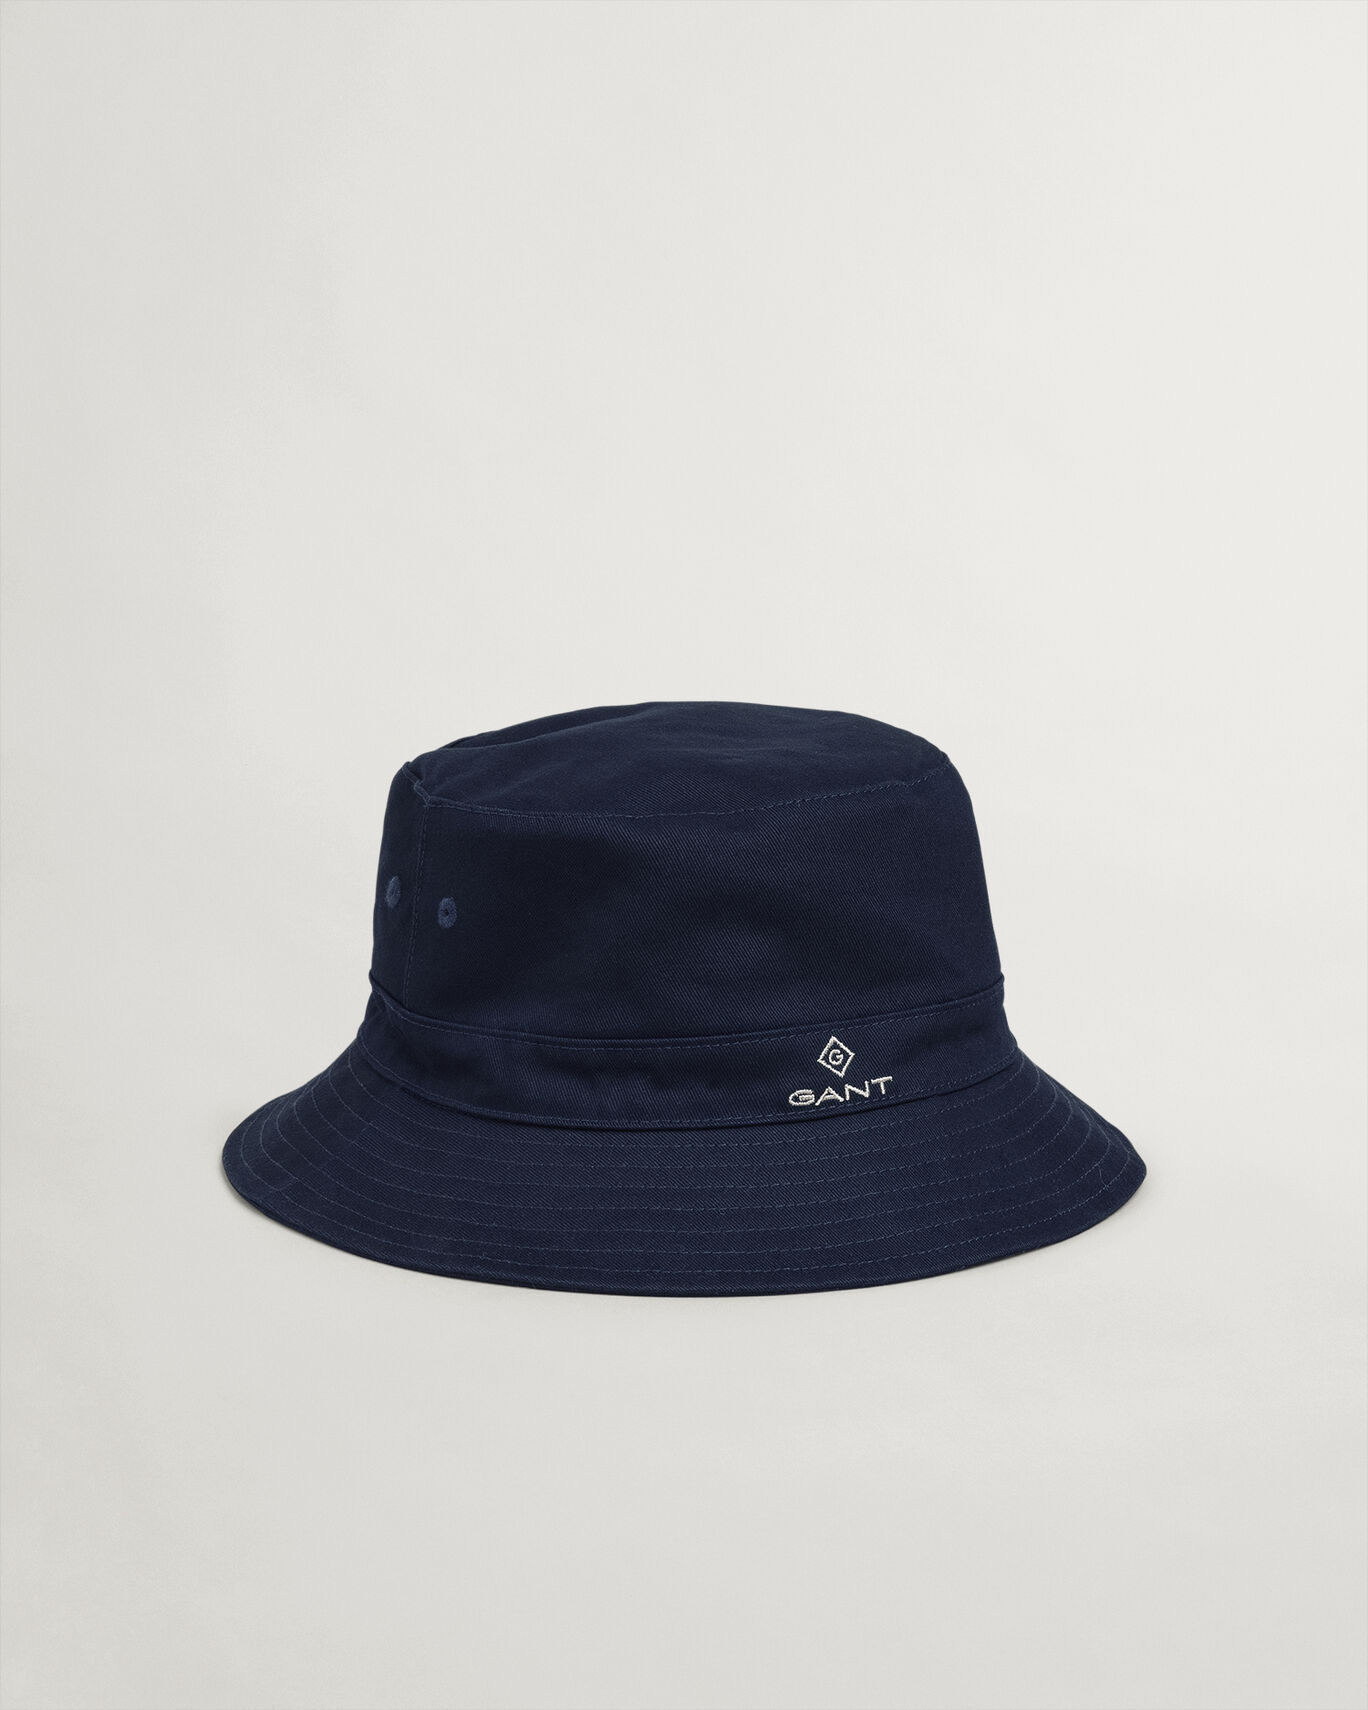 Buy Gant Bucket Hat Marine - Scandinavian Fashion Store